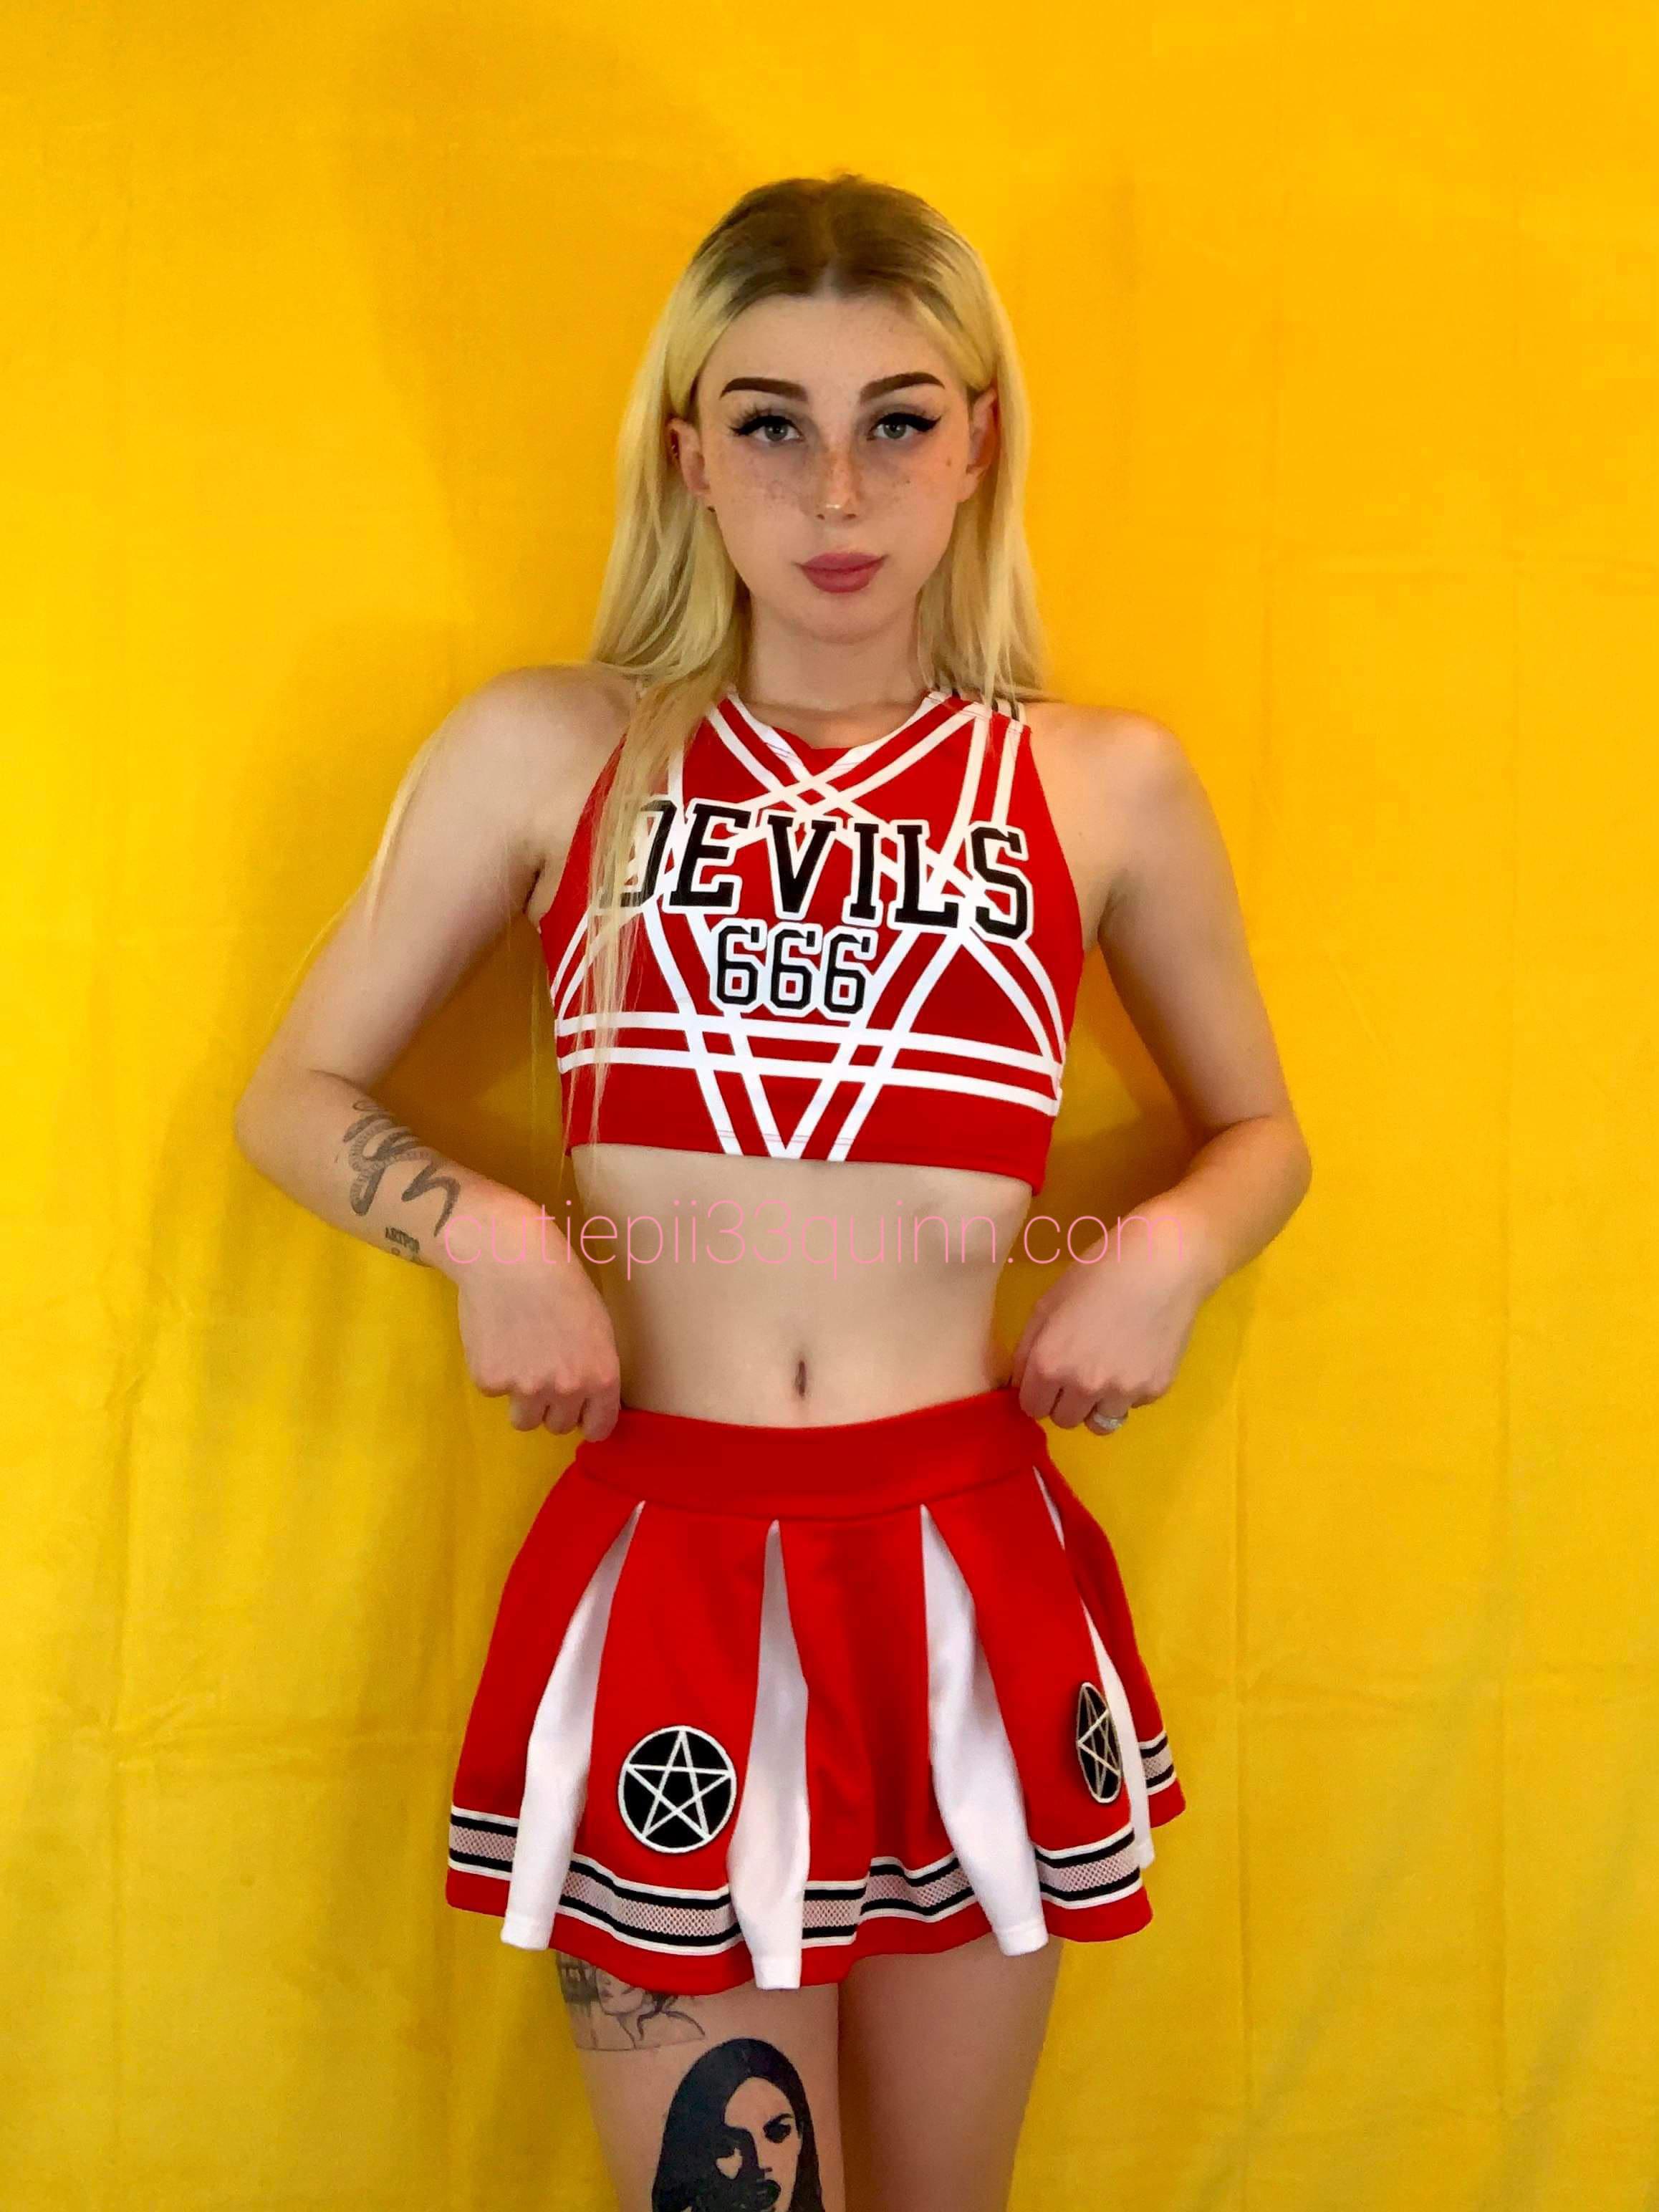 Cheerleader Dancing For The Devils Scrolller 